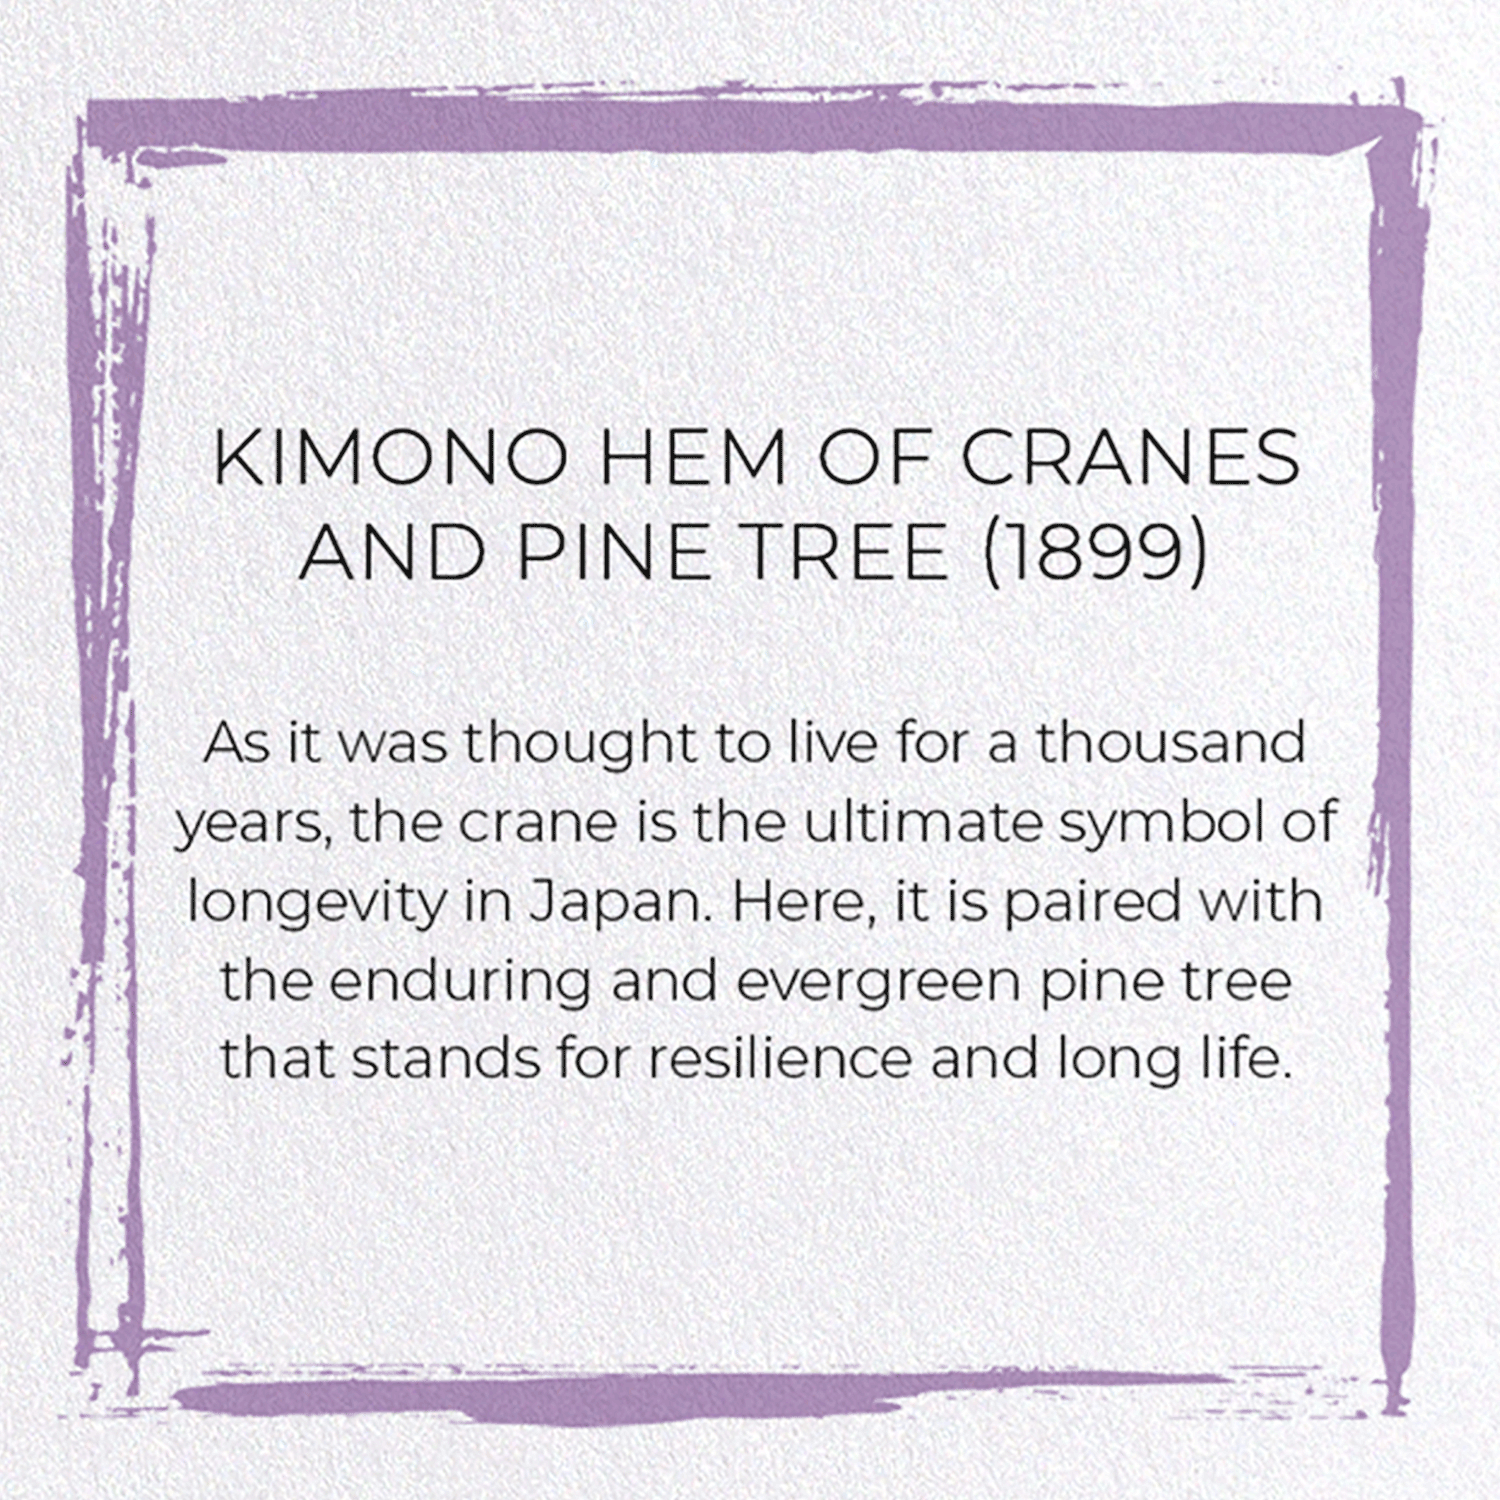 KIMONO HEM OF CRANES AND PINE TREE (1899)